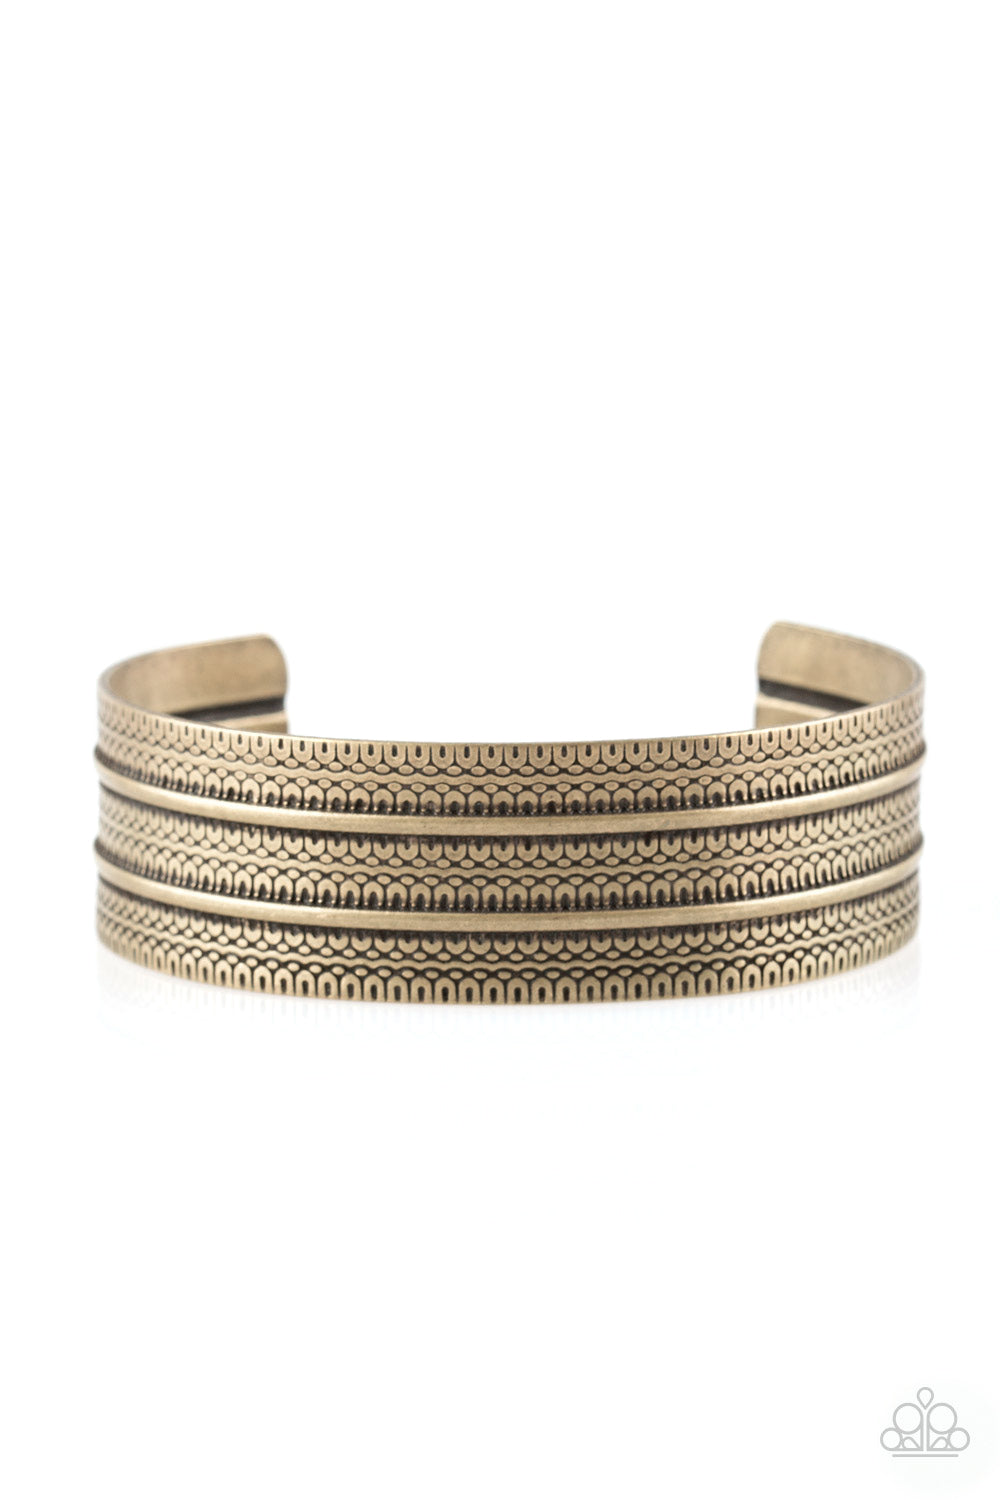 Absolute Amazon Bracelets - Brass